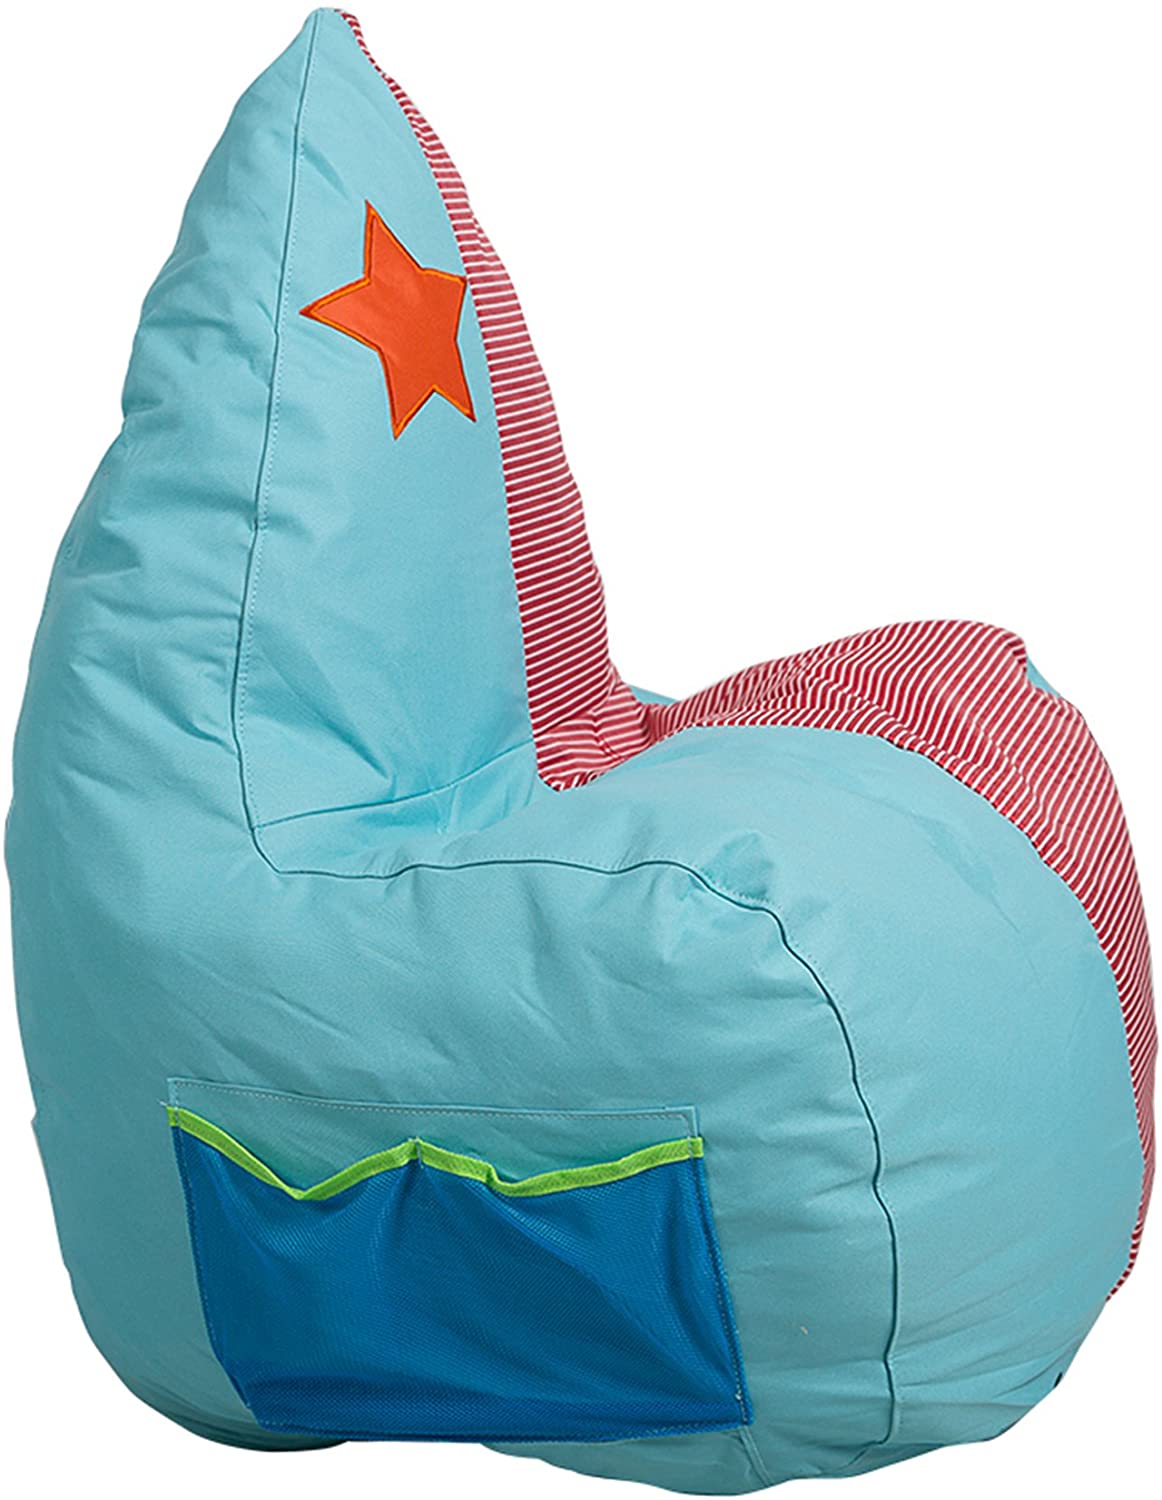 Soft Kids Bean Bag Chair Children Lounger Chairs Sofa - 3 Types - Self-Rebound Sponge, Star